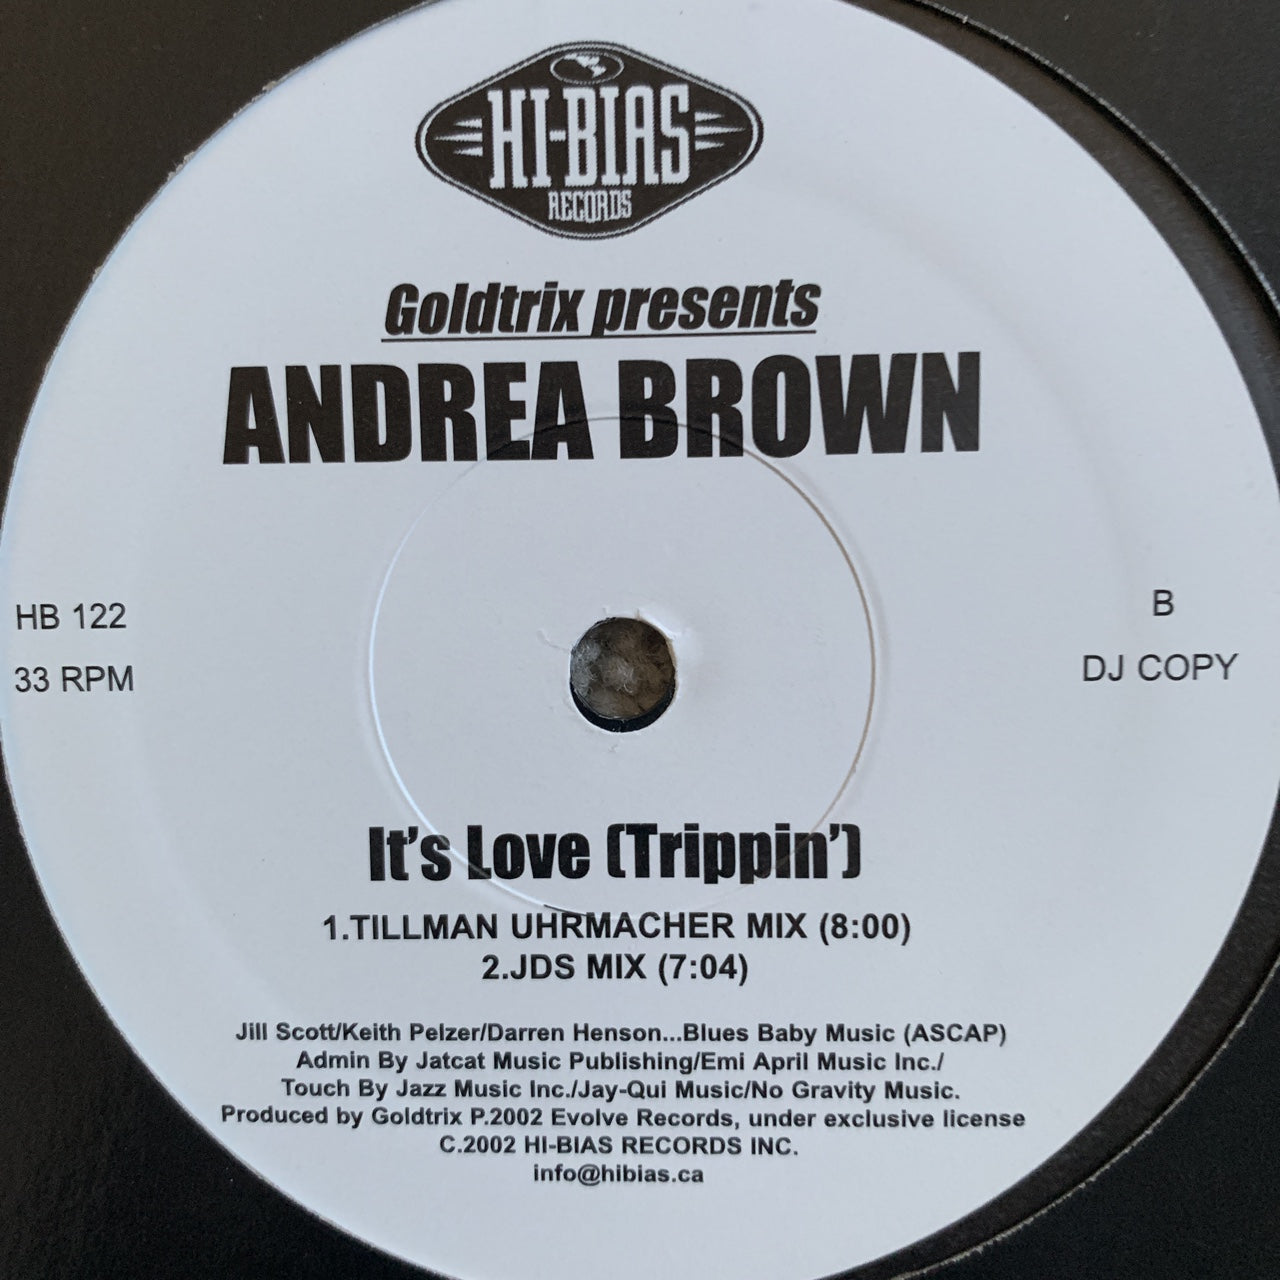 Goldtrix Presents Andrea Brown “It’s Love (Trippin)”